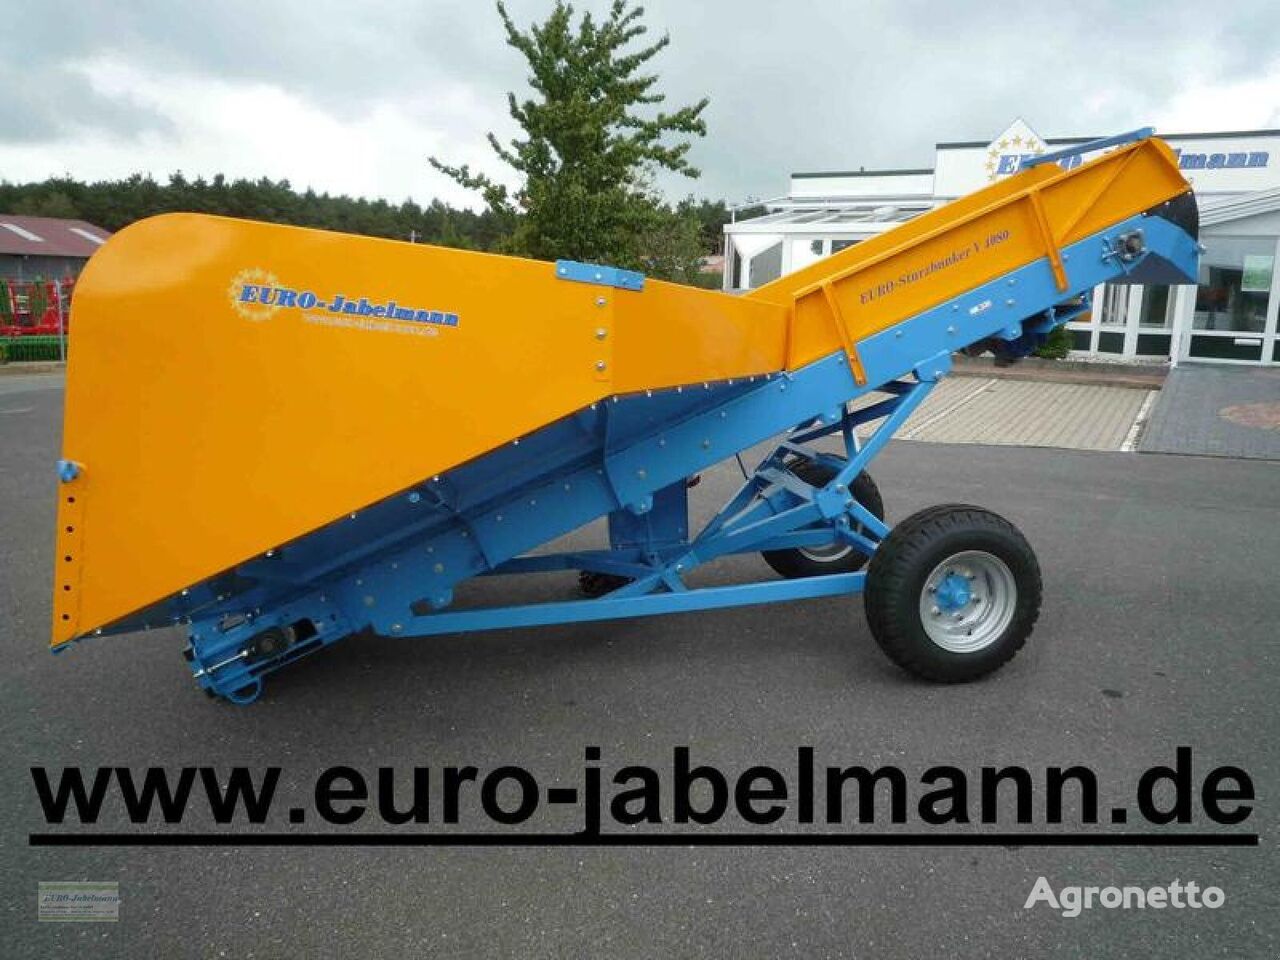 phễu thu Euro-Jabelmann 3 Modelle, eigene Herstellung (Made in Germany) mới